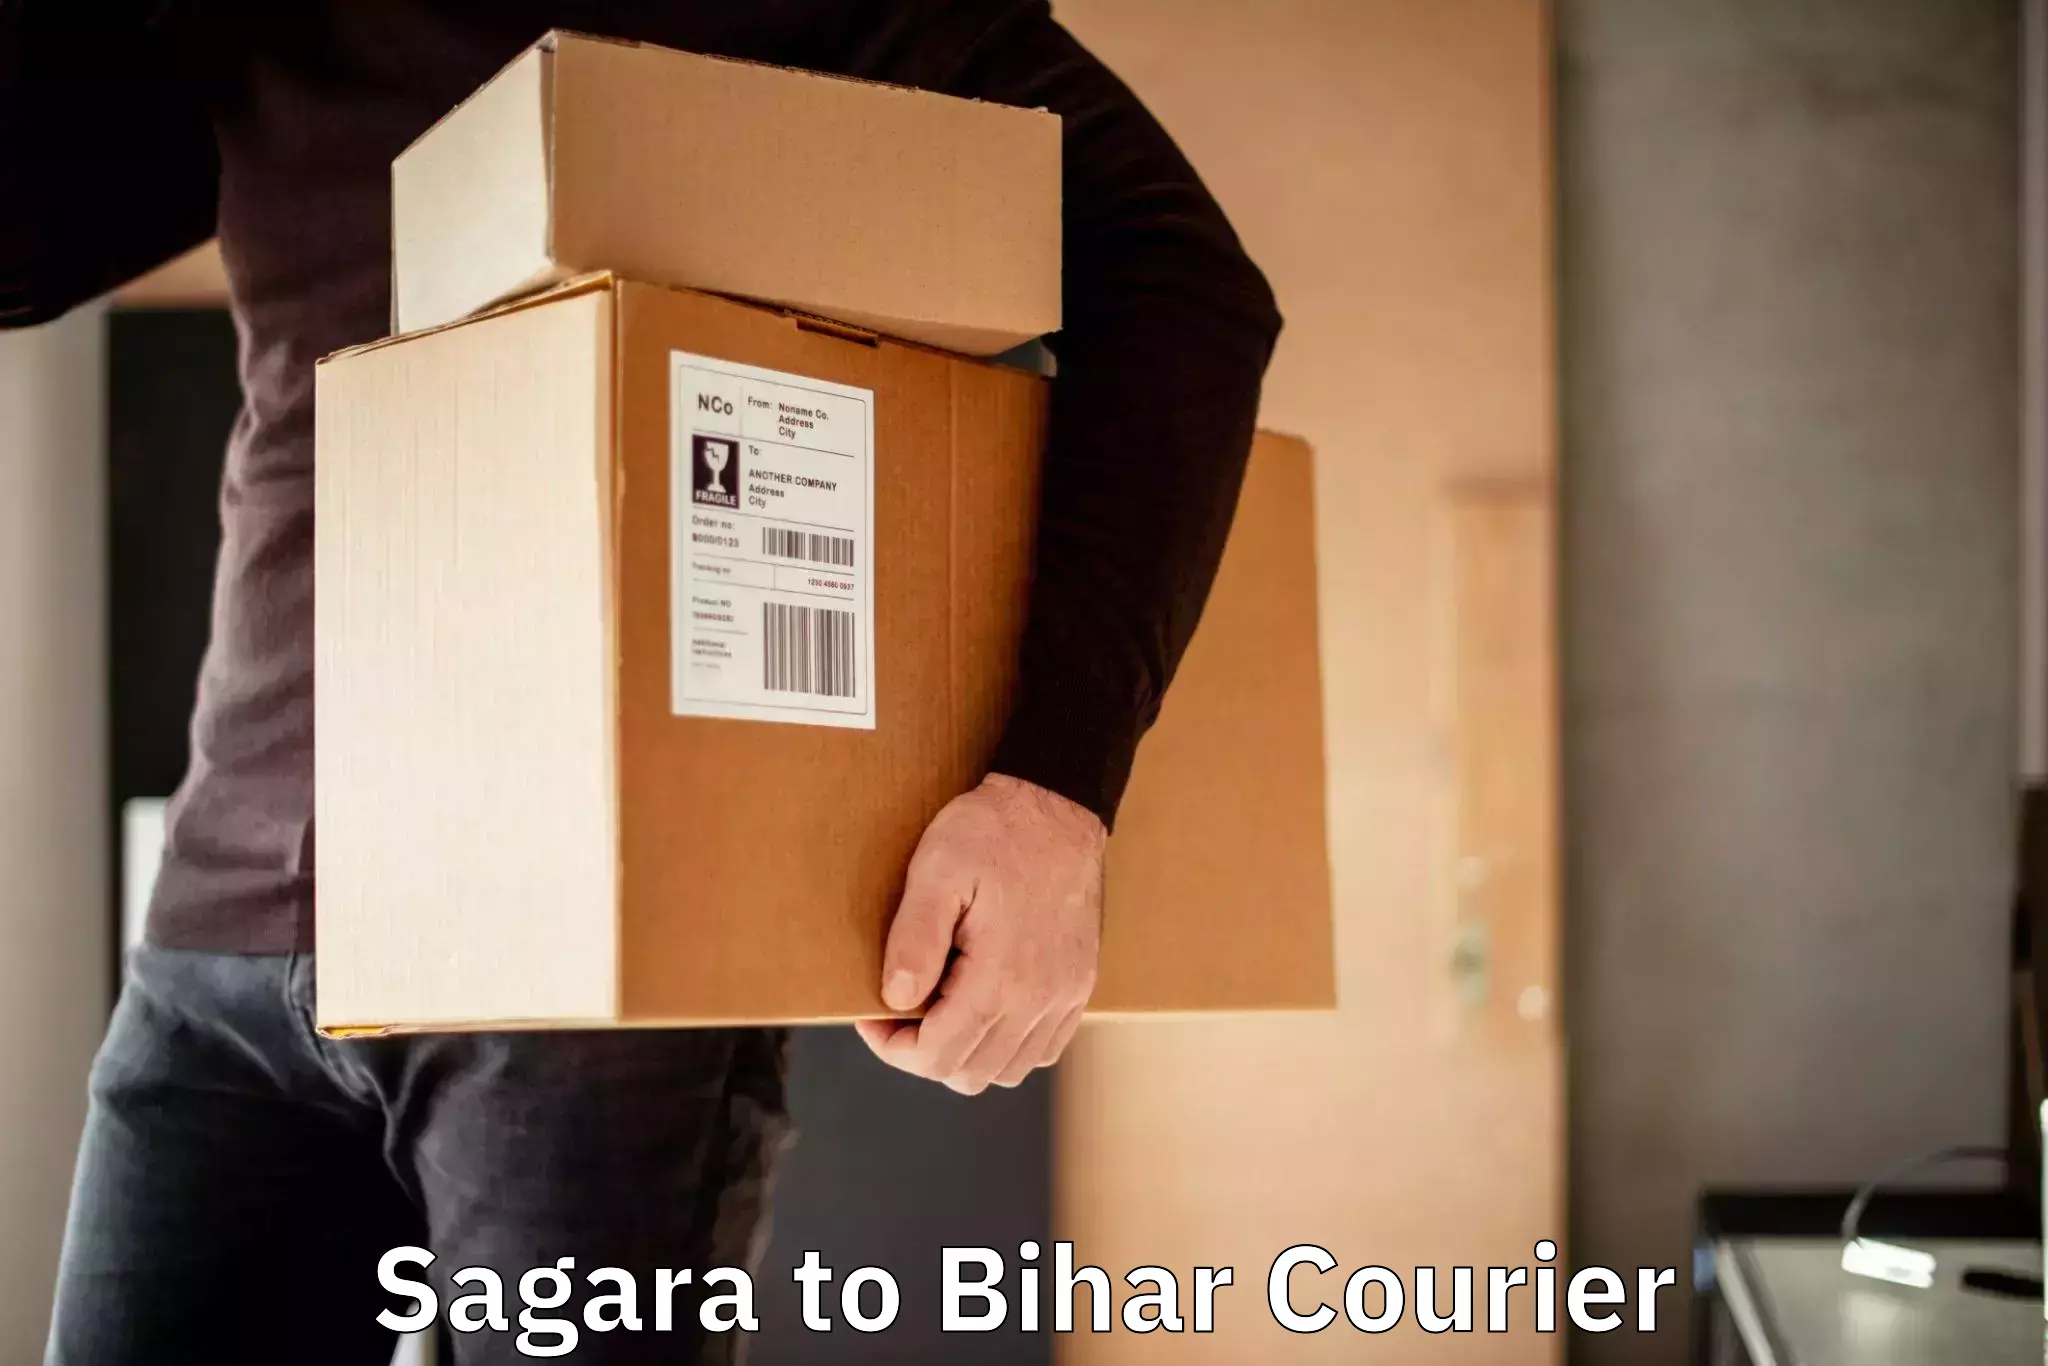 Professional courier handling Sagara to Malmaliya